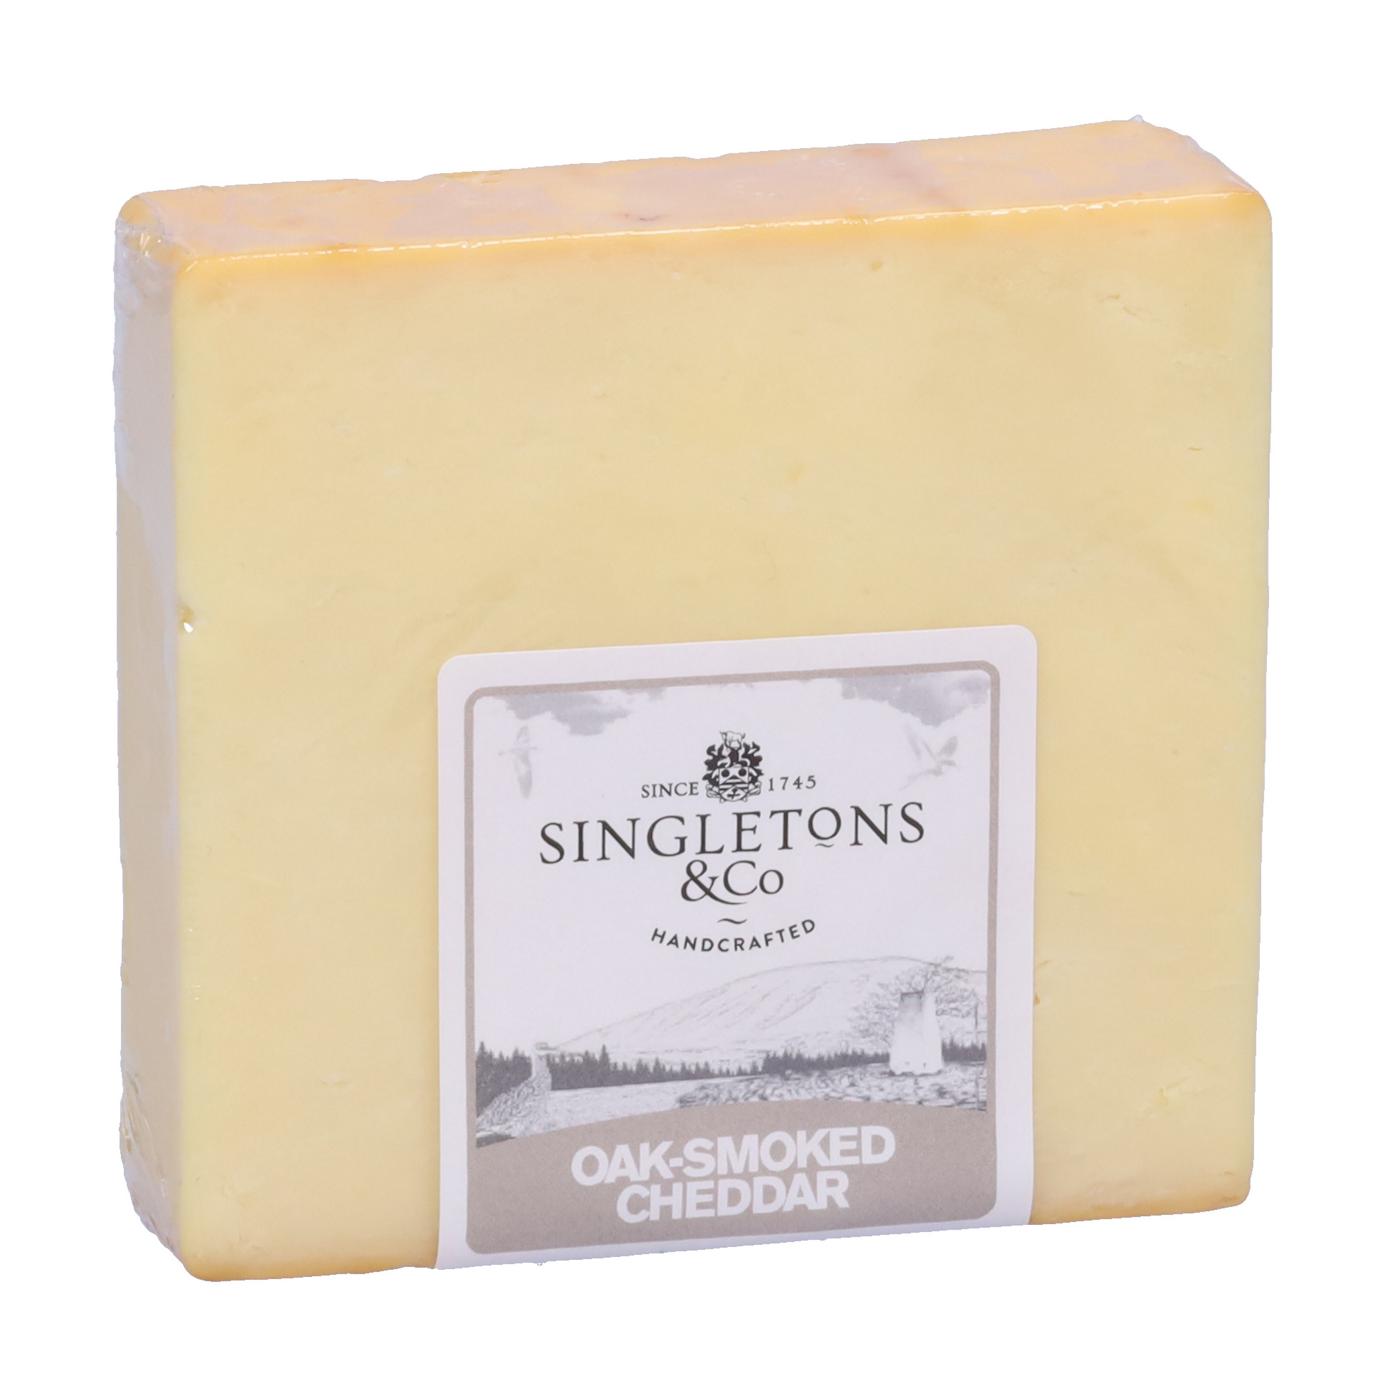 Singleton's English Oak Smoked Cheddar Cheese; image 2 of 2